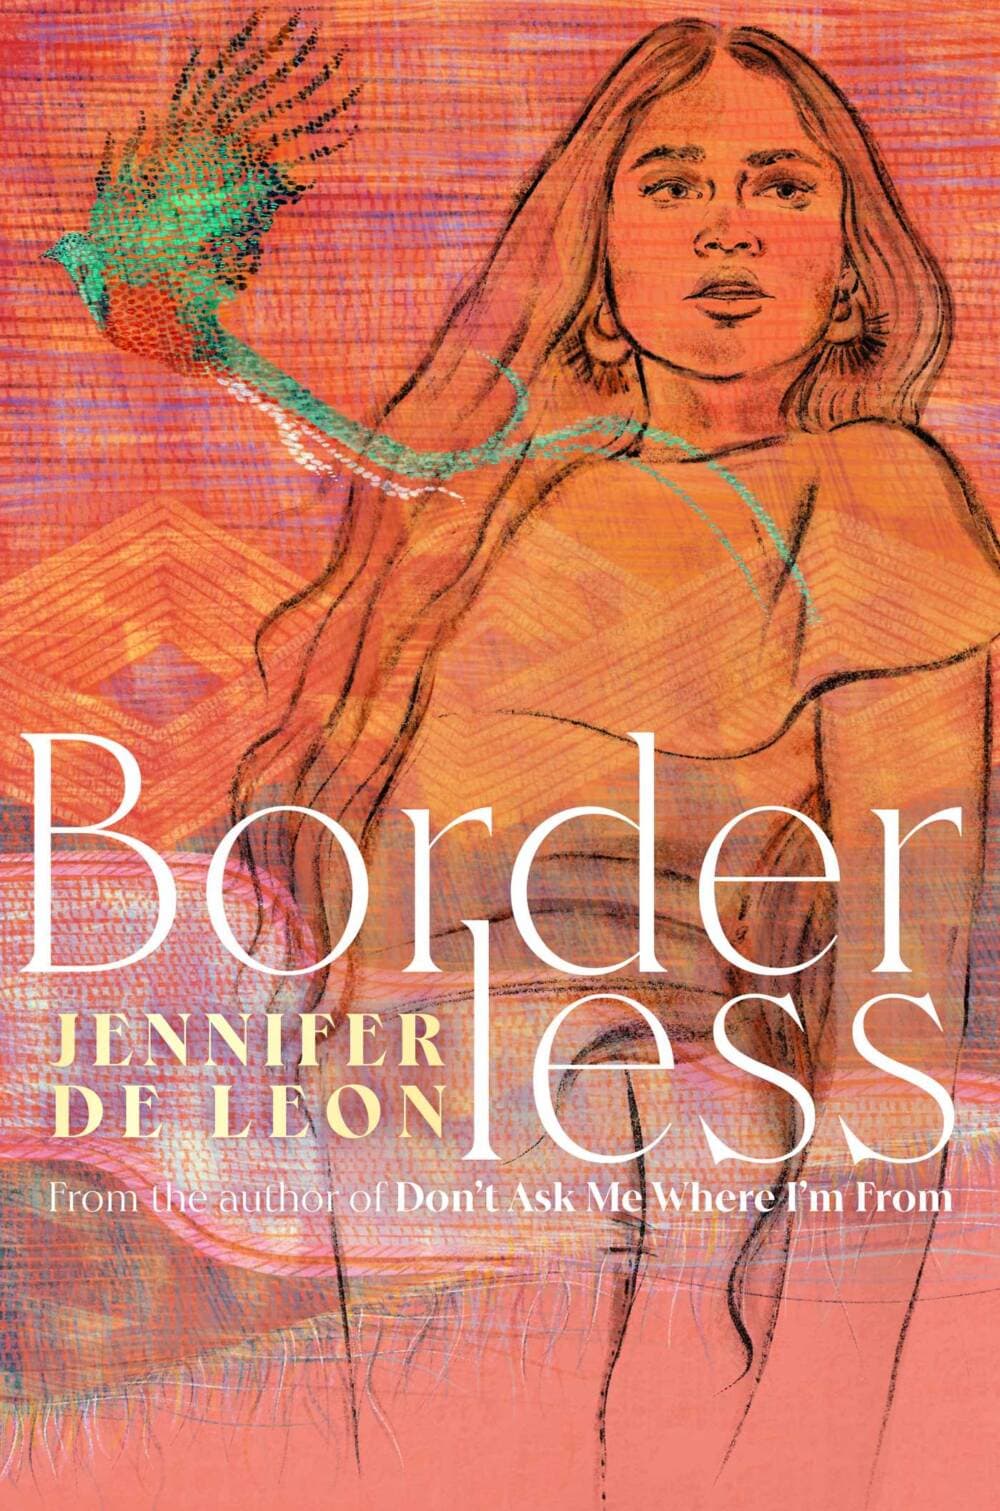 The cover of "Borderless" by Jennifer De Leon. (Courtesy)